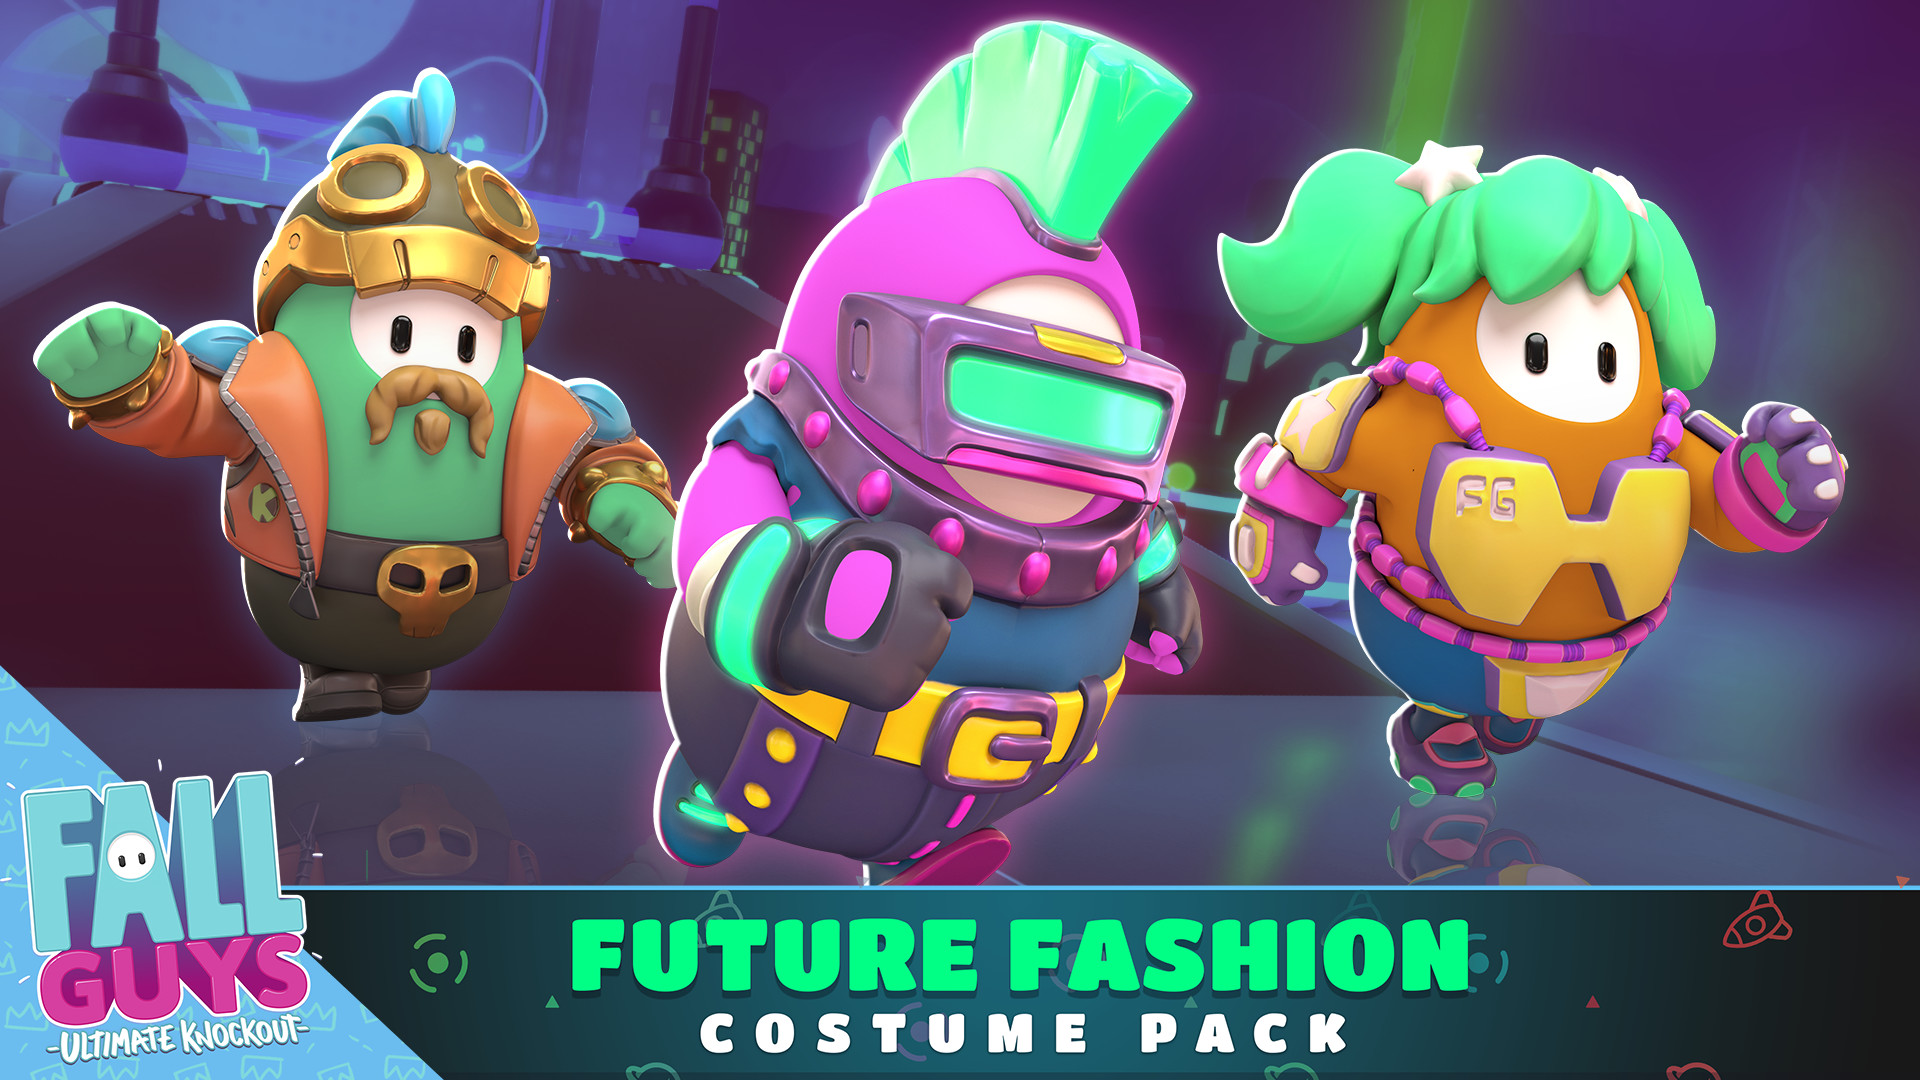 Fall Guys - Future Fashion Pack Featured Screenshot #1